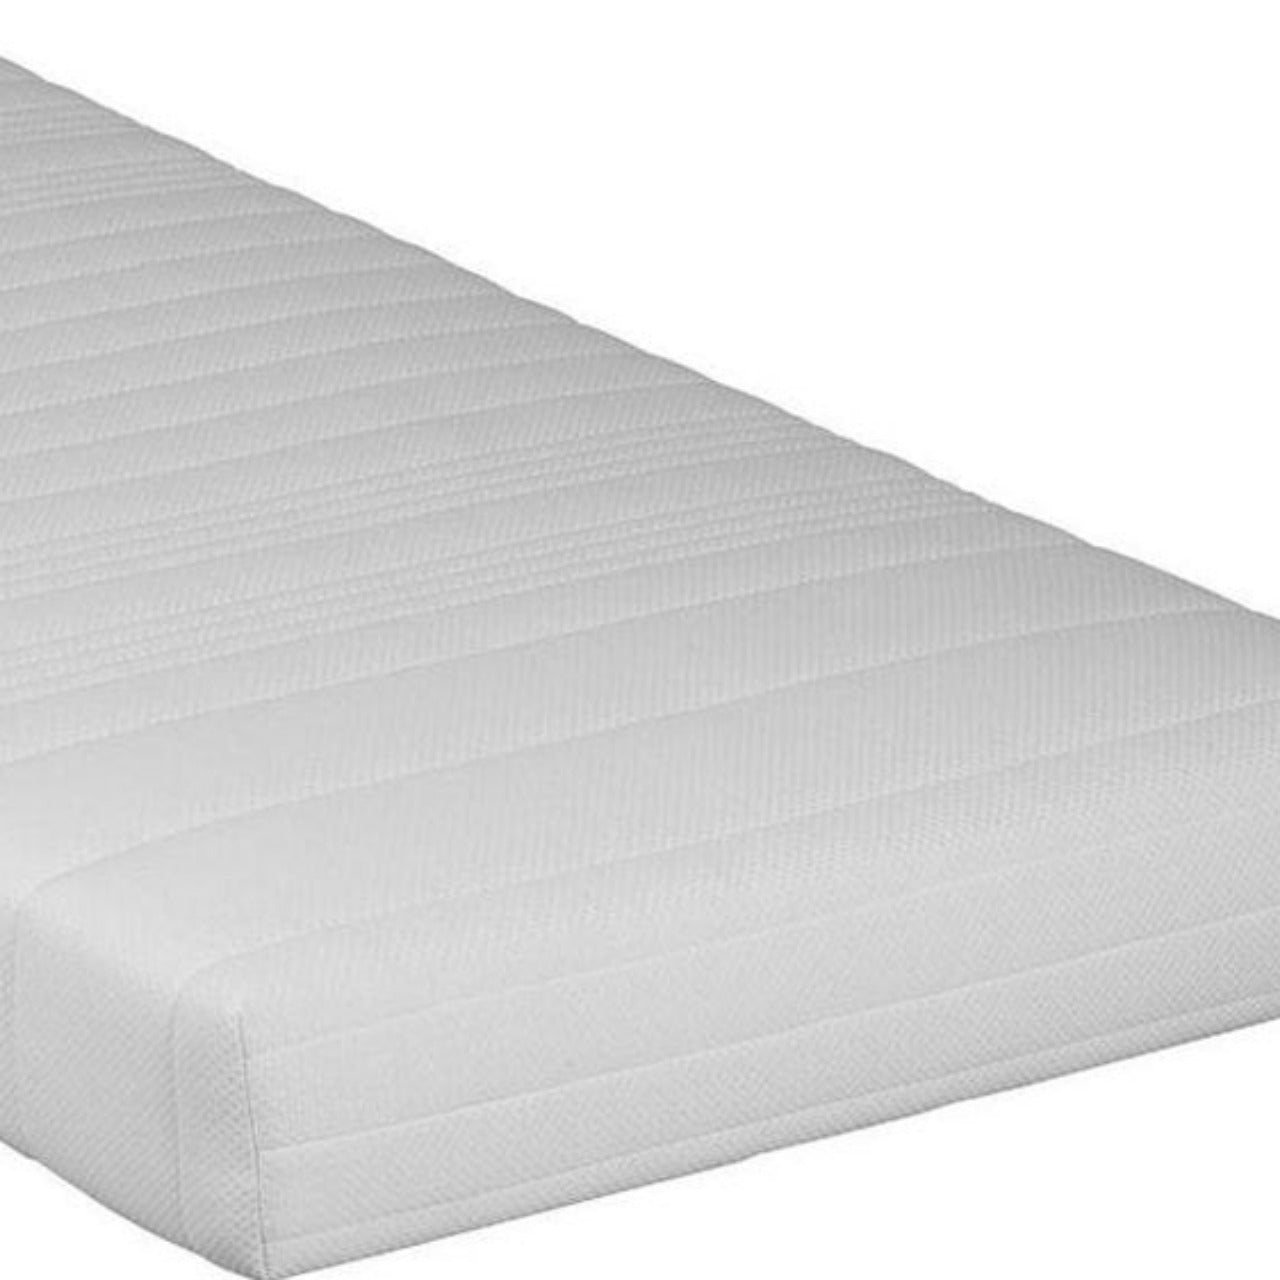 Acemo mattress 140x200x14 SG30